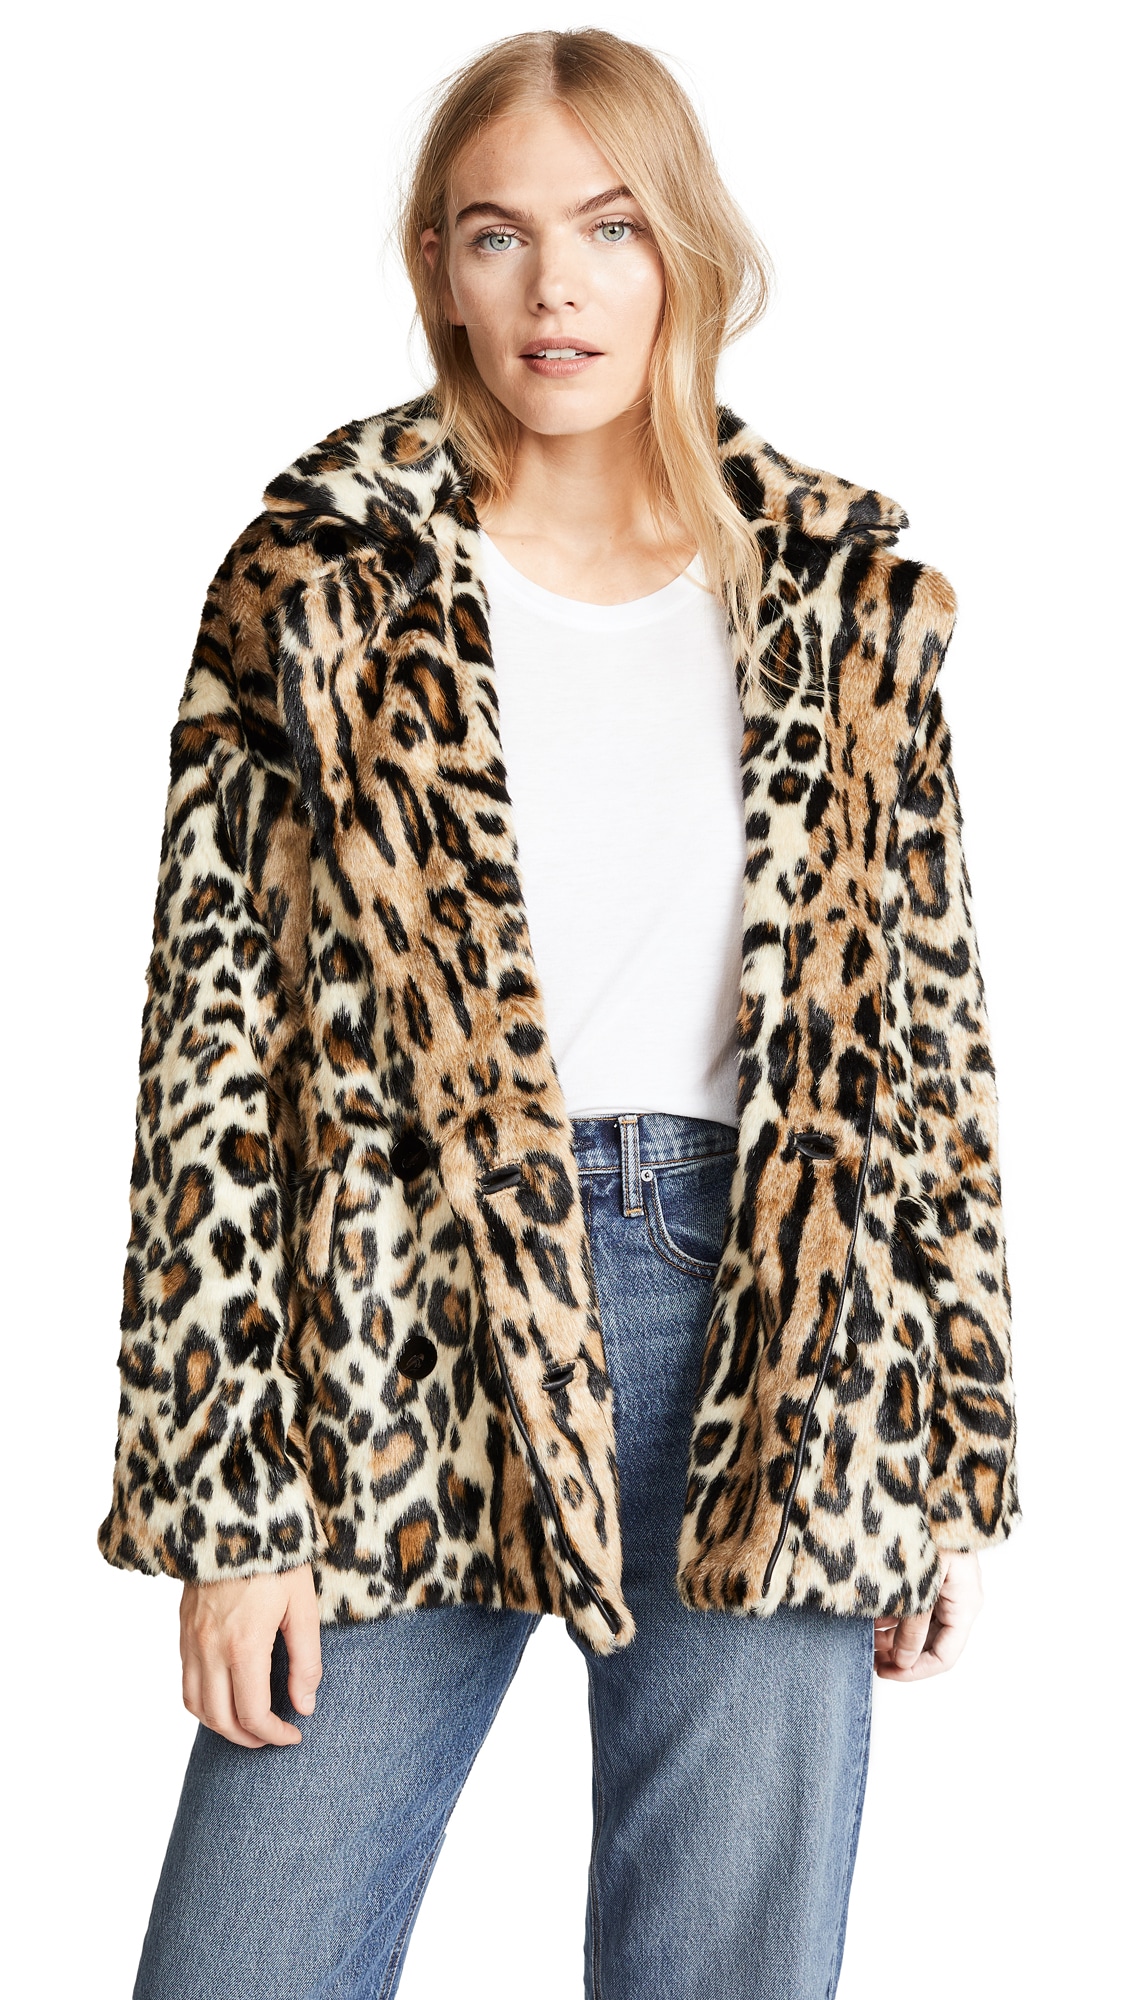 Free People Kate Leopard Coat $268